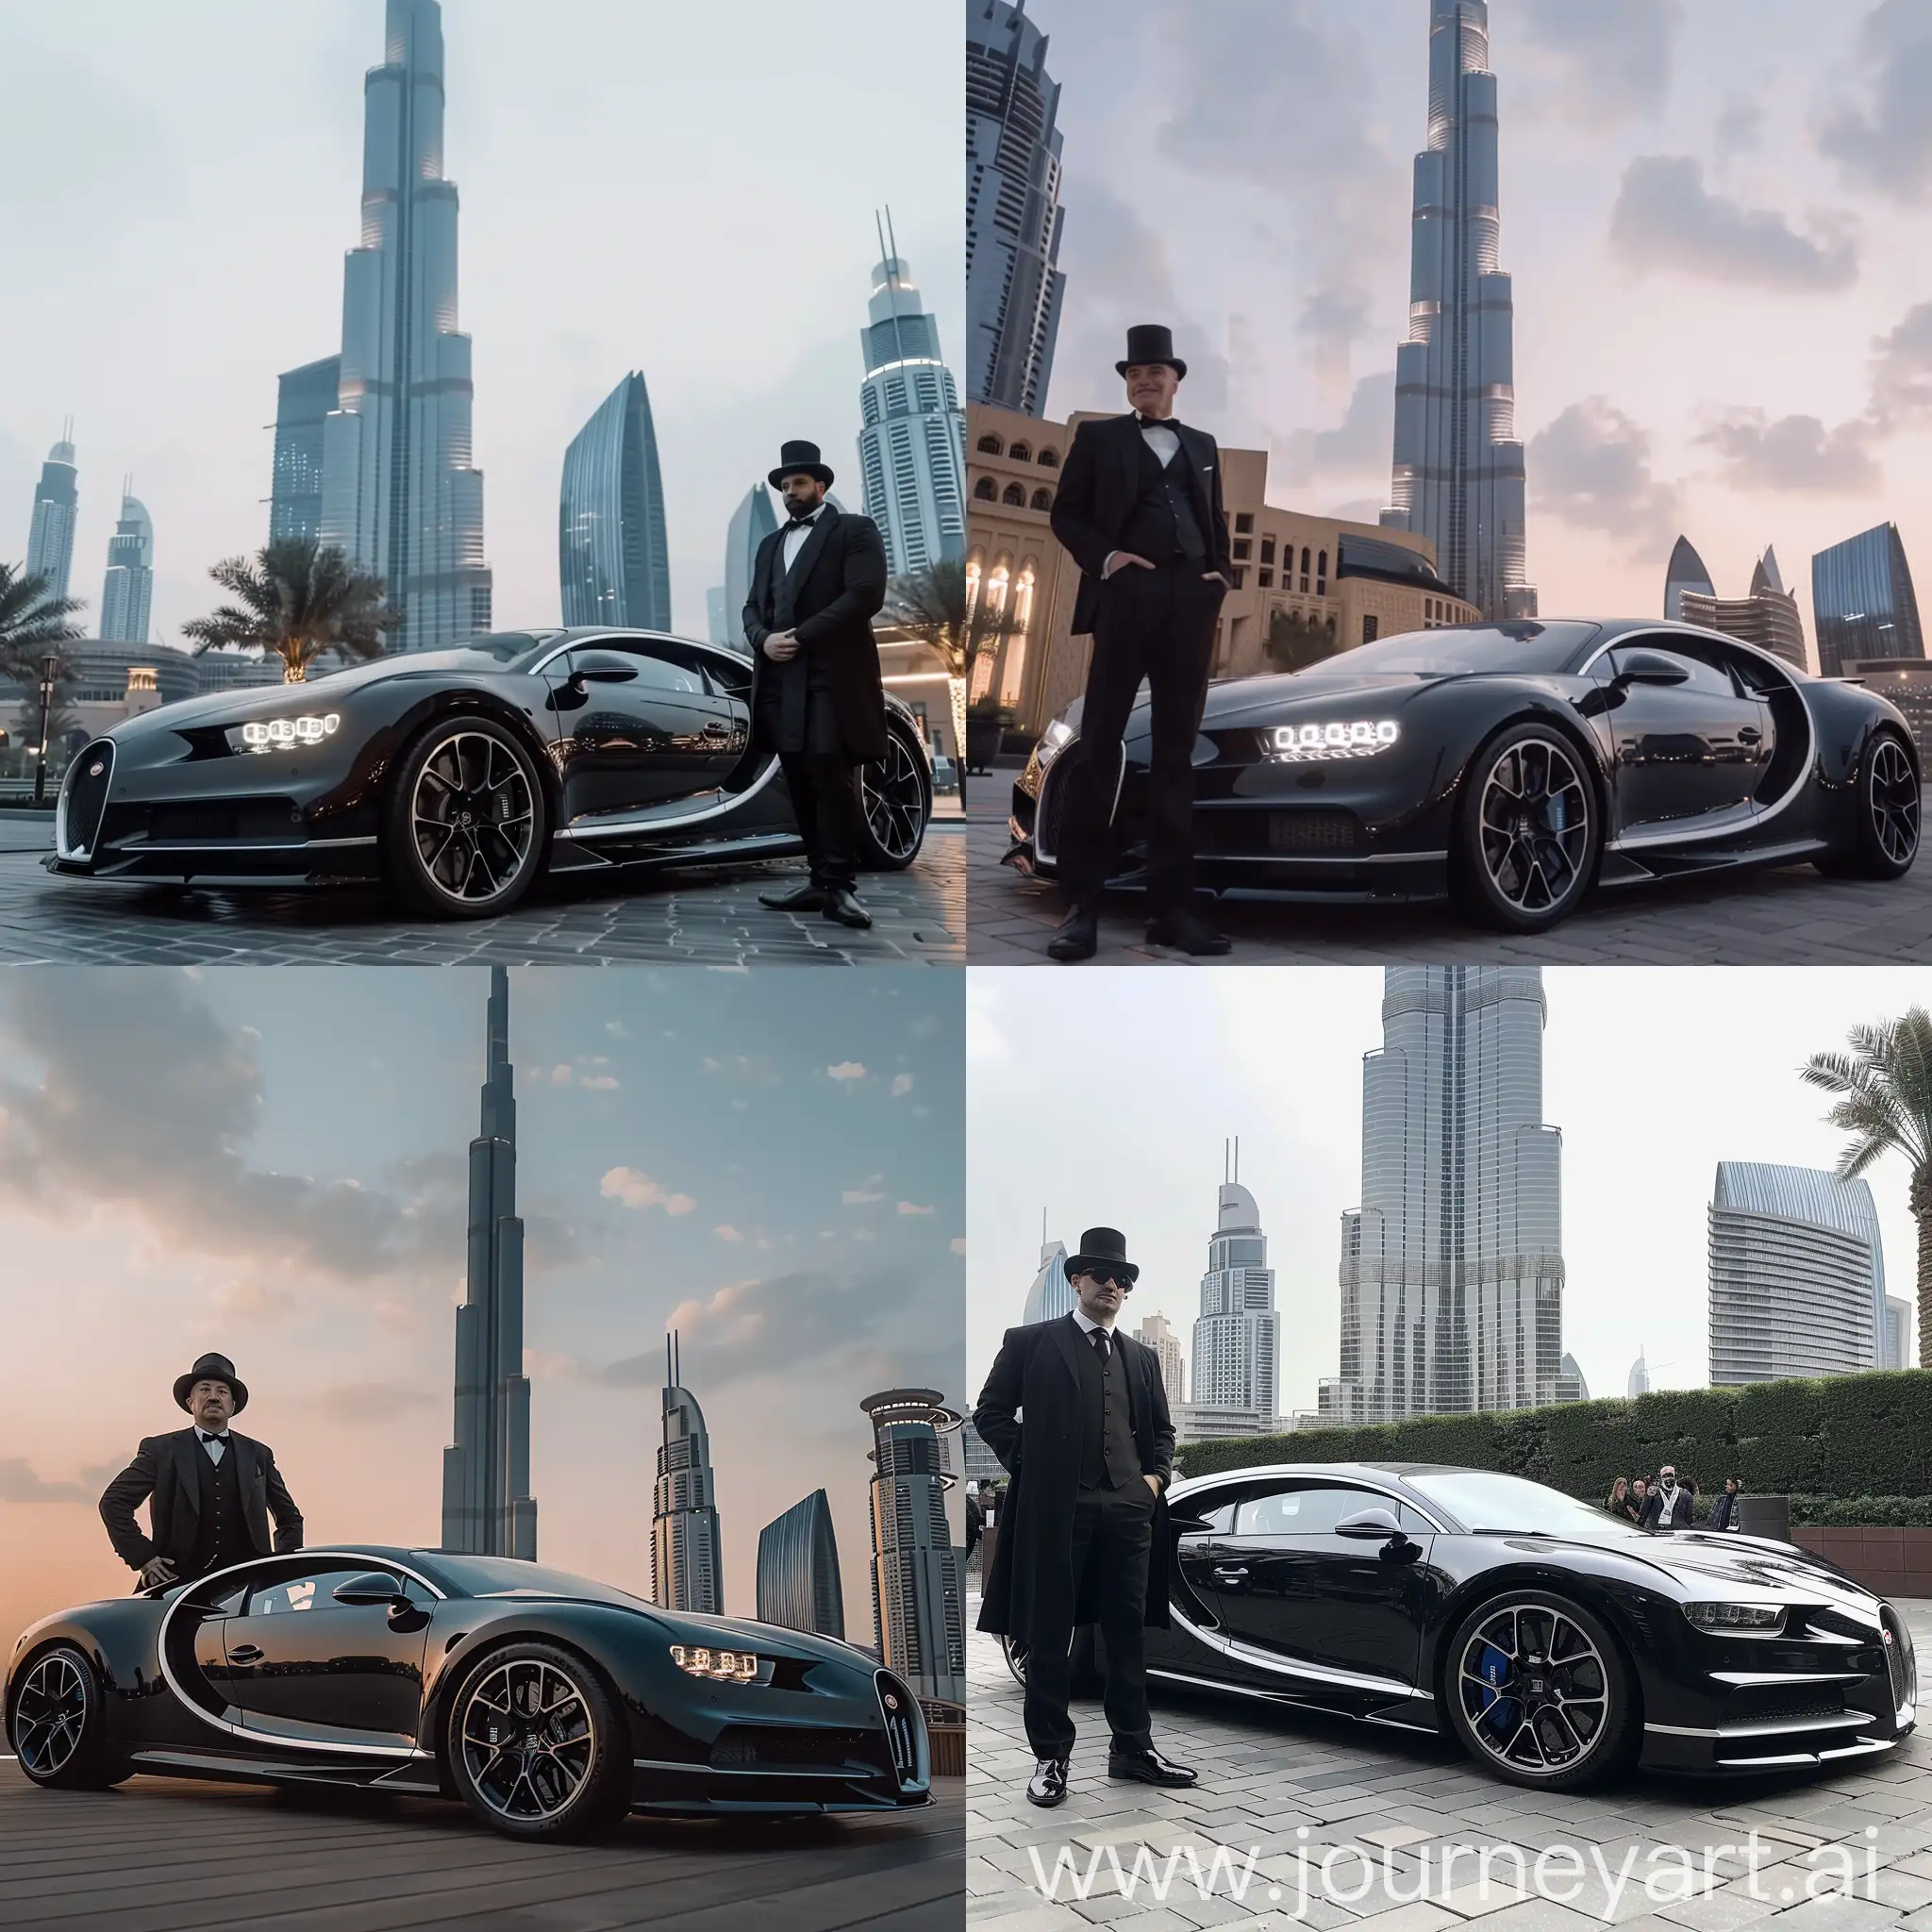 Moriarty-Next-to-Bugatti-Chiron-at-Burj-Khalifa